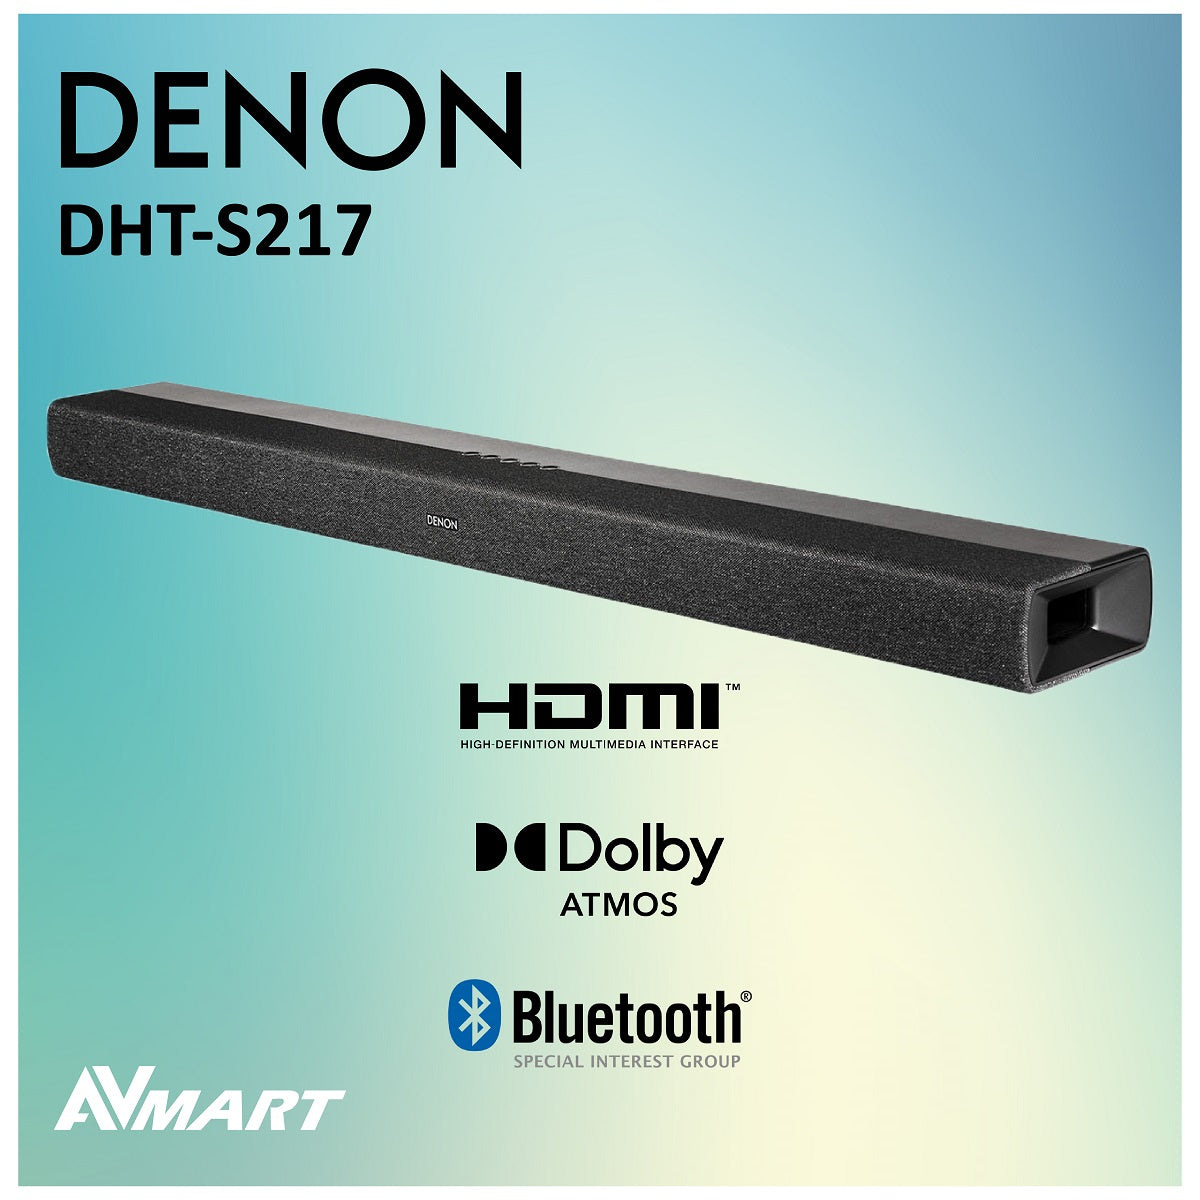 一體式家居音響DHTS217 MART DENON Dolby AV Soundbar – 杜比全景聲2.1 天龍DHT-S217 ATMOS